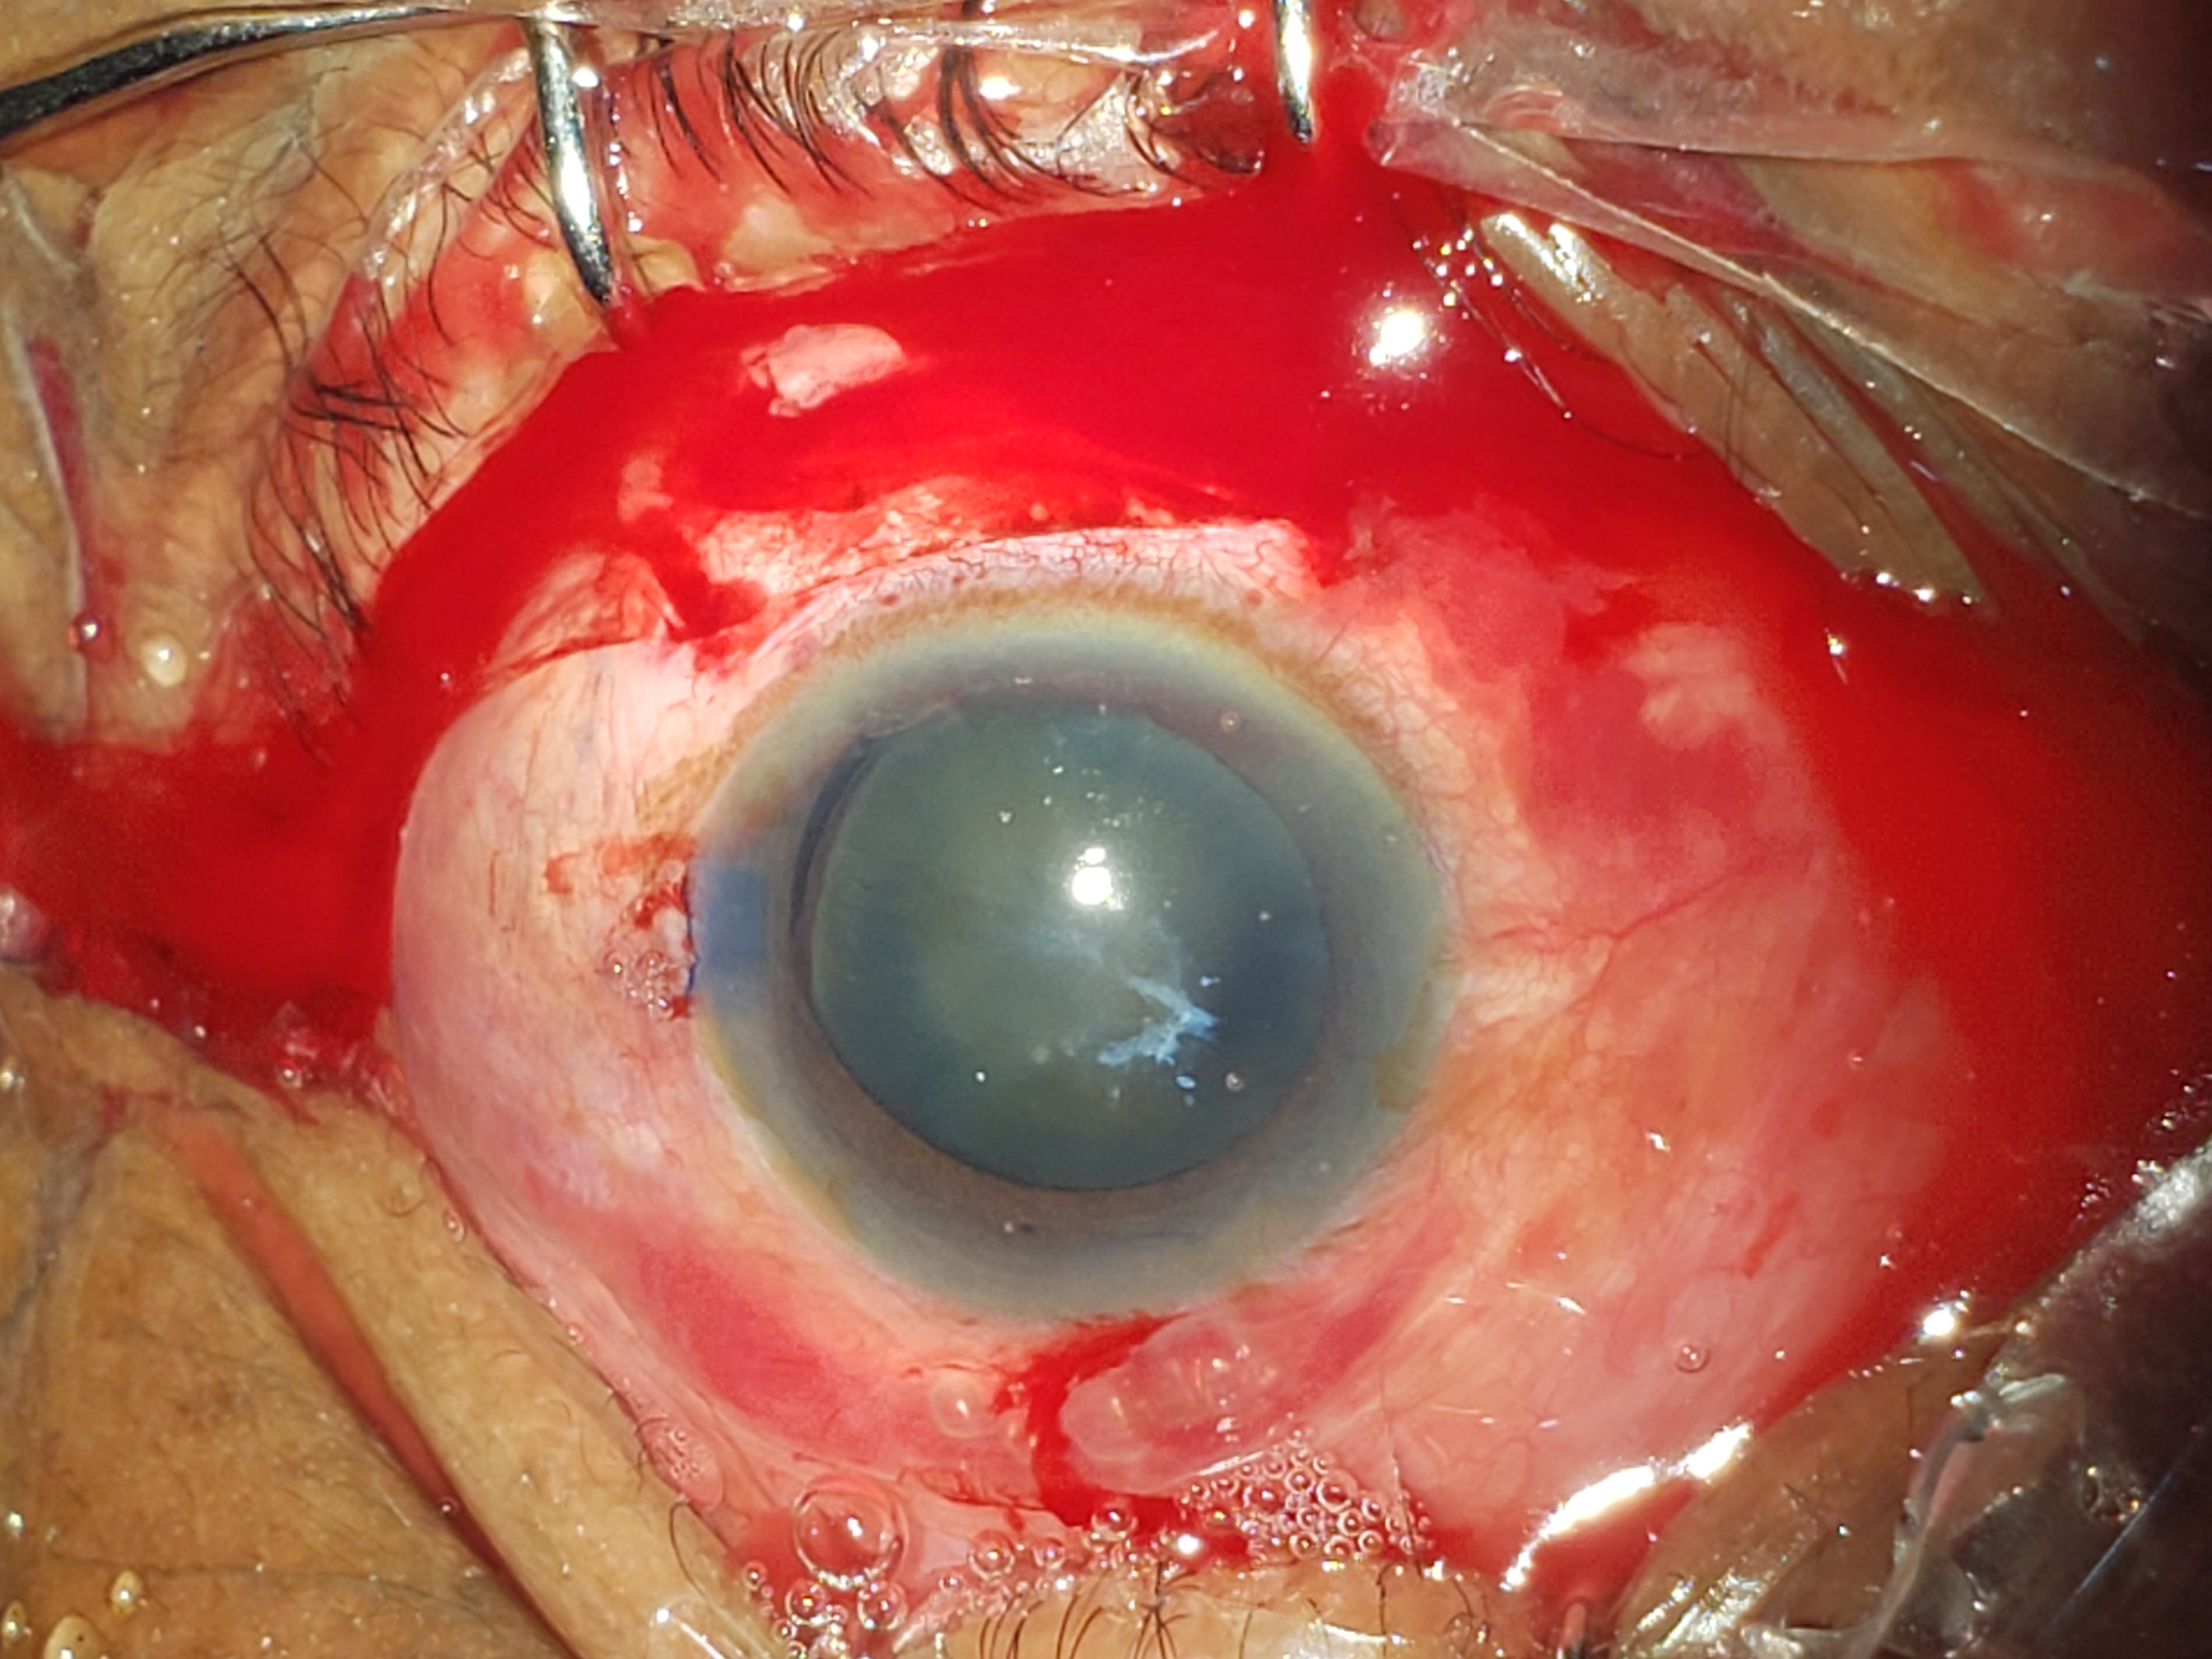 Traumatic Cataract. A traumatic cataract associated with zonular dialysis and anterior capsular fibrosis.